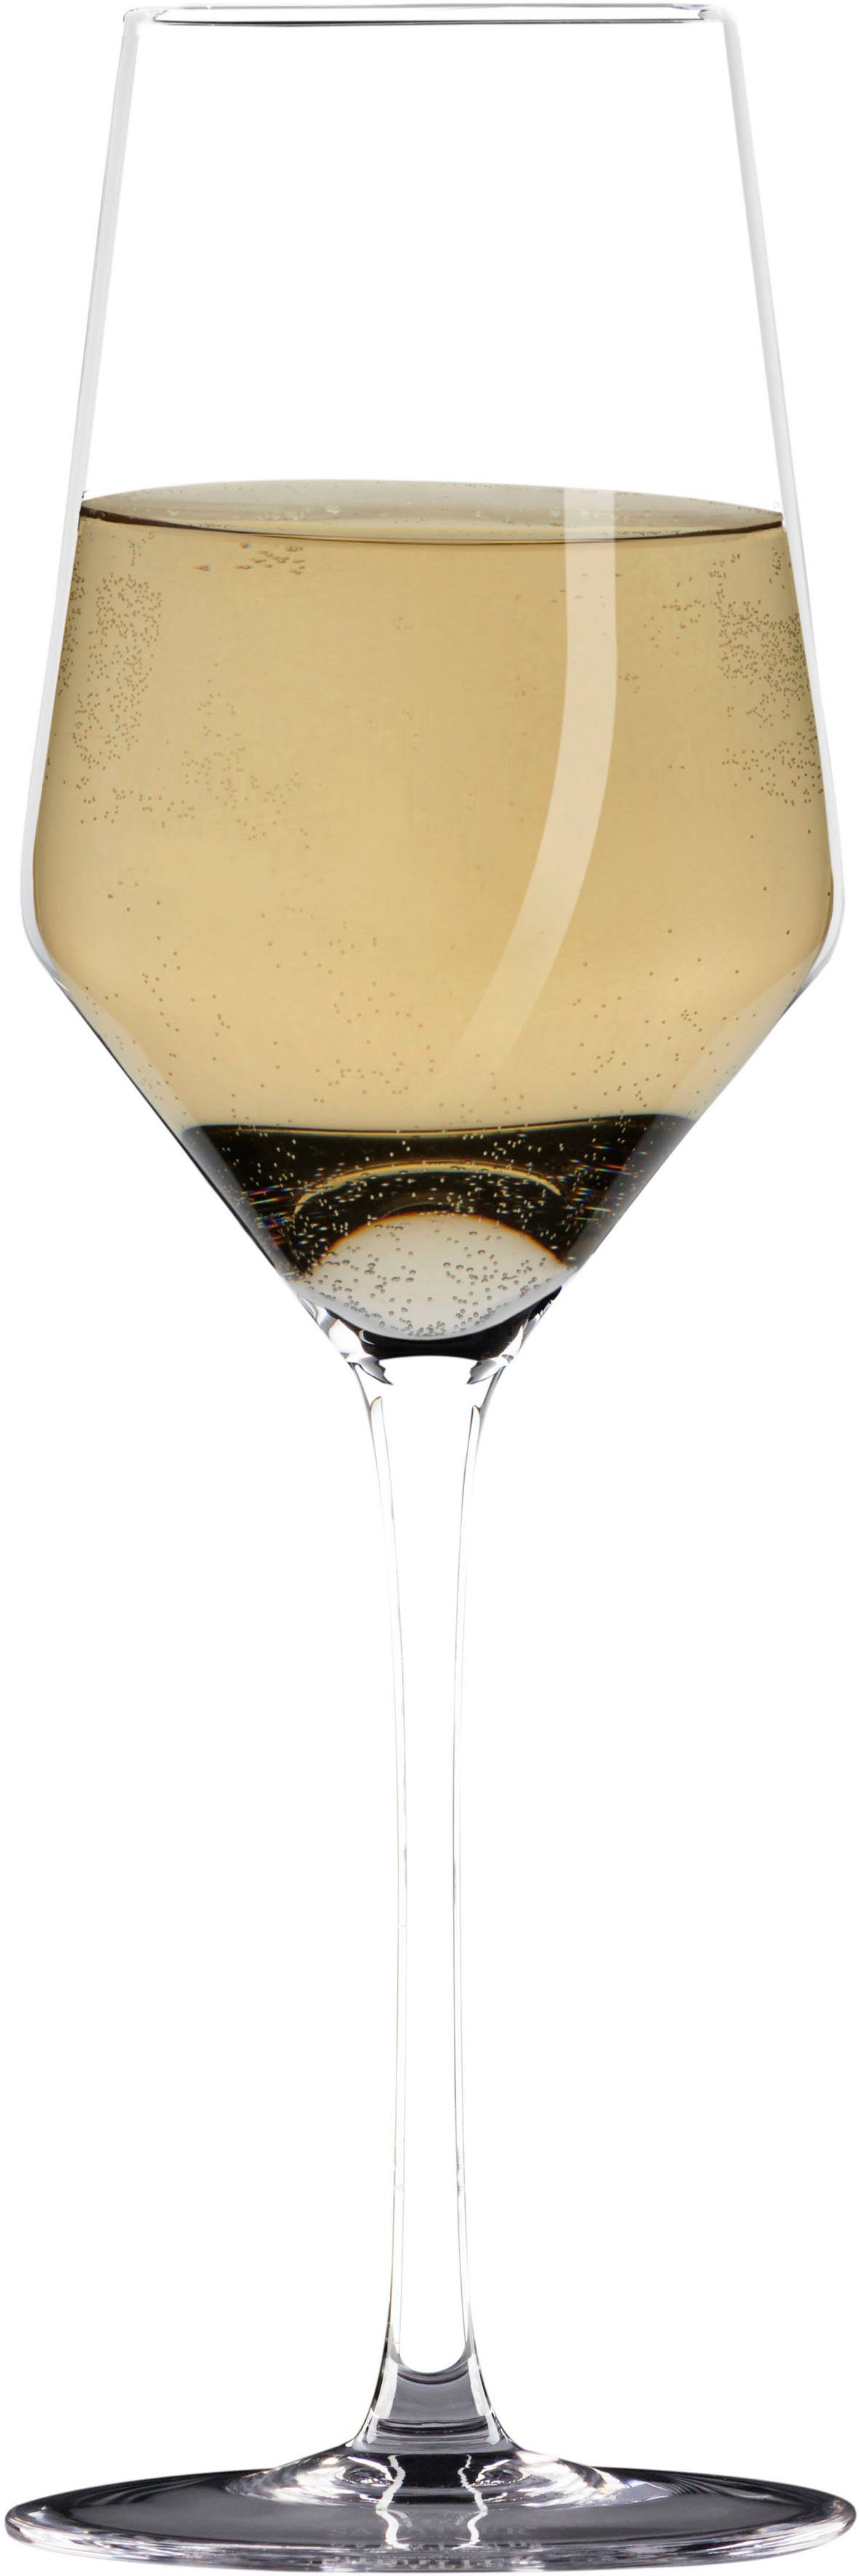 Inhalt International Weißweinglas, SABATIER L, Kristallglas, 2-teilig 0,4